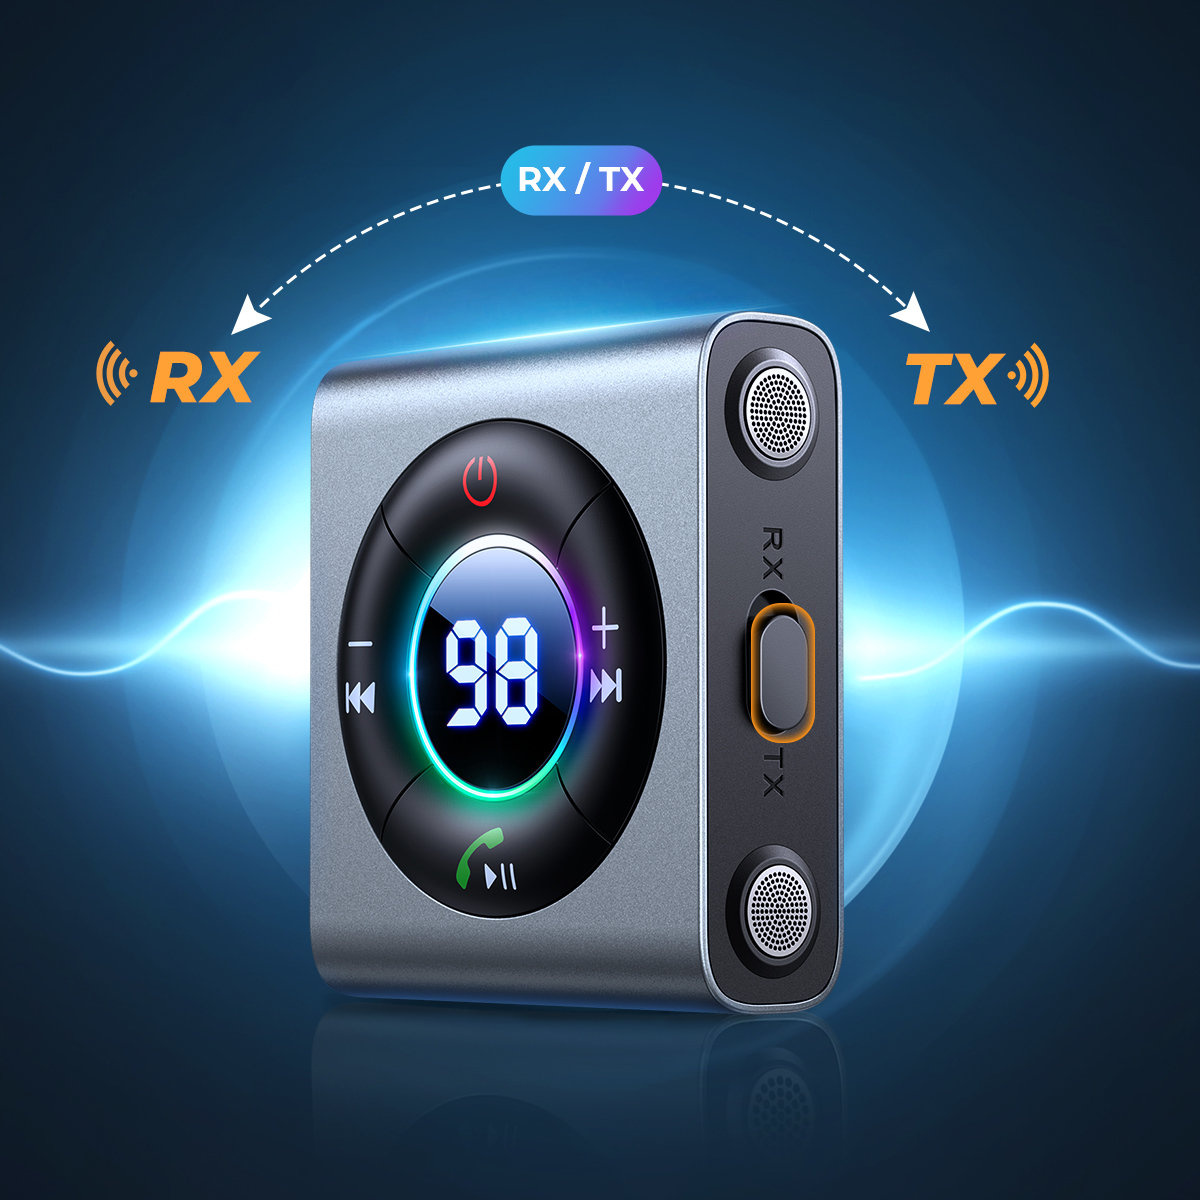 Transmitter Joyroom JR-CB2 Bluetooth AUX (transmitter/receiver) for car/TV grey